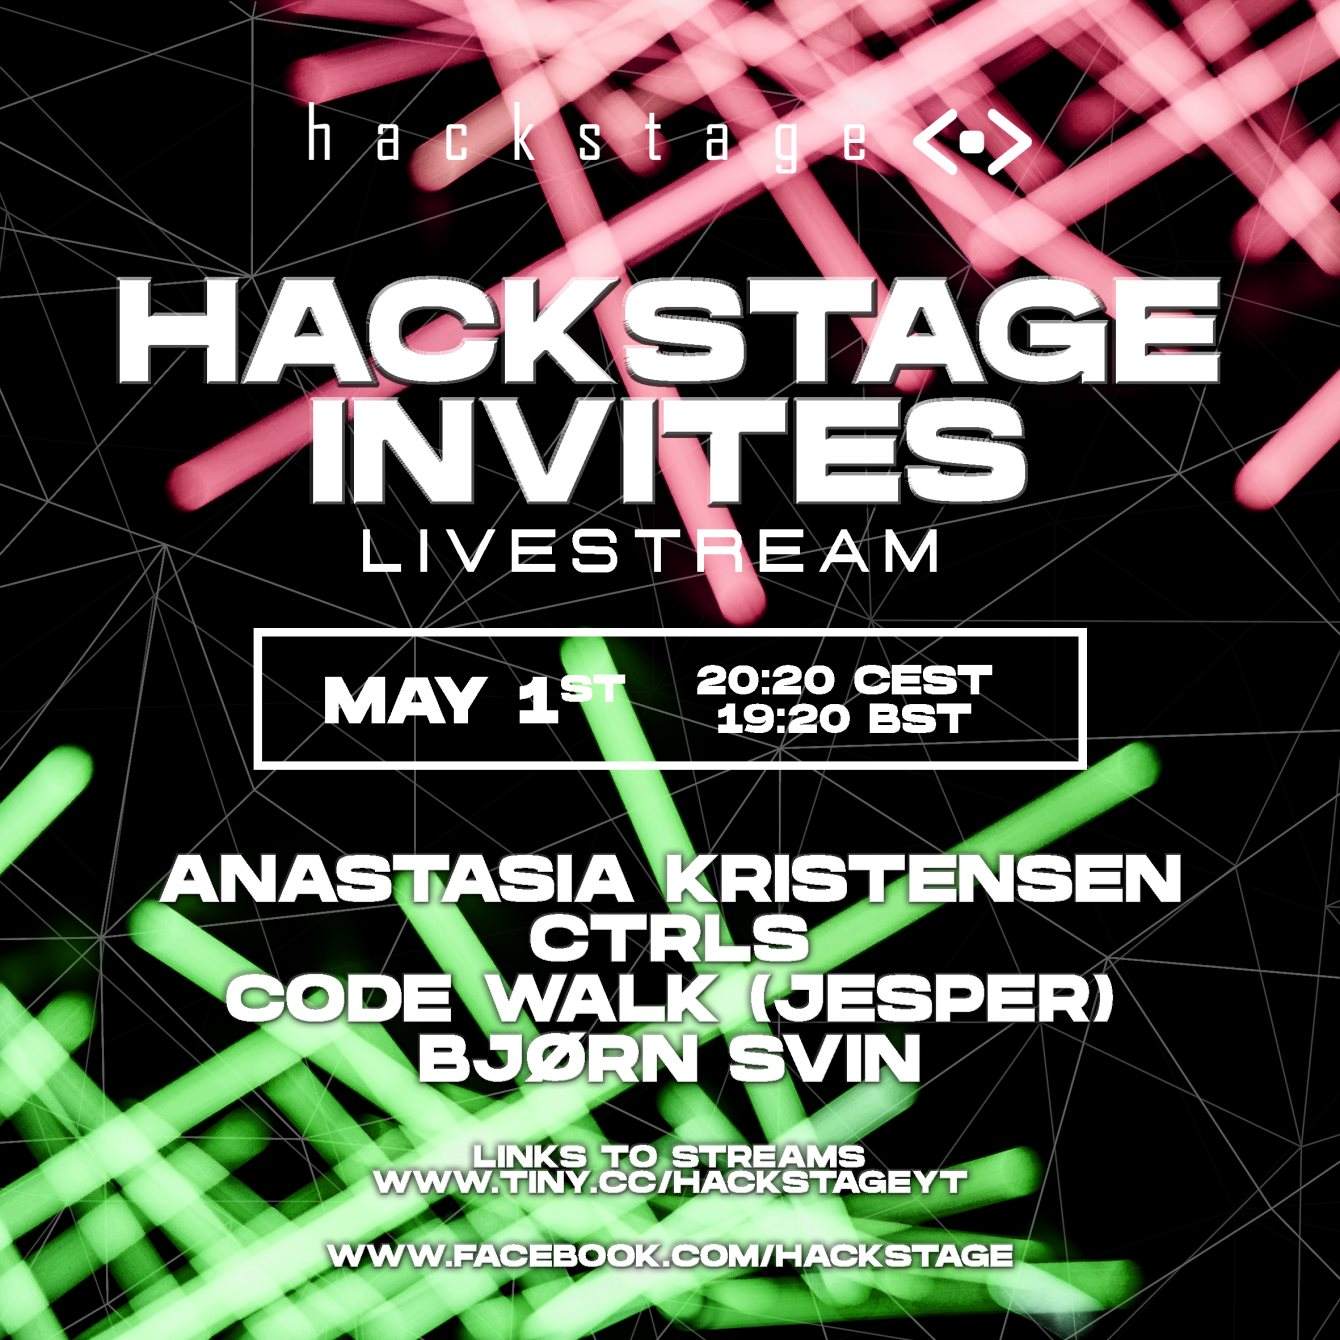 Hackstage Invites (Livestream in Copenhagen) - フライヤー表